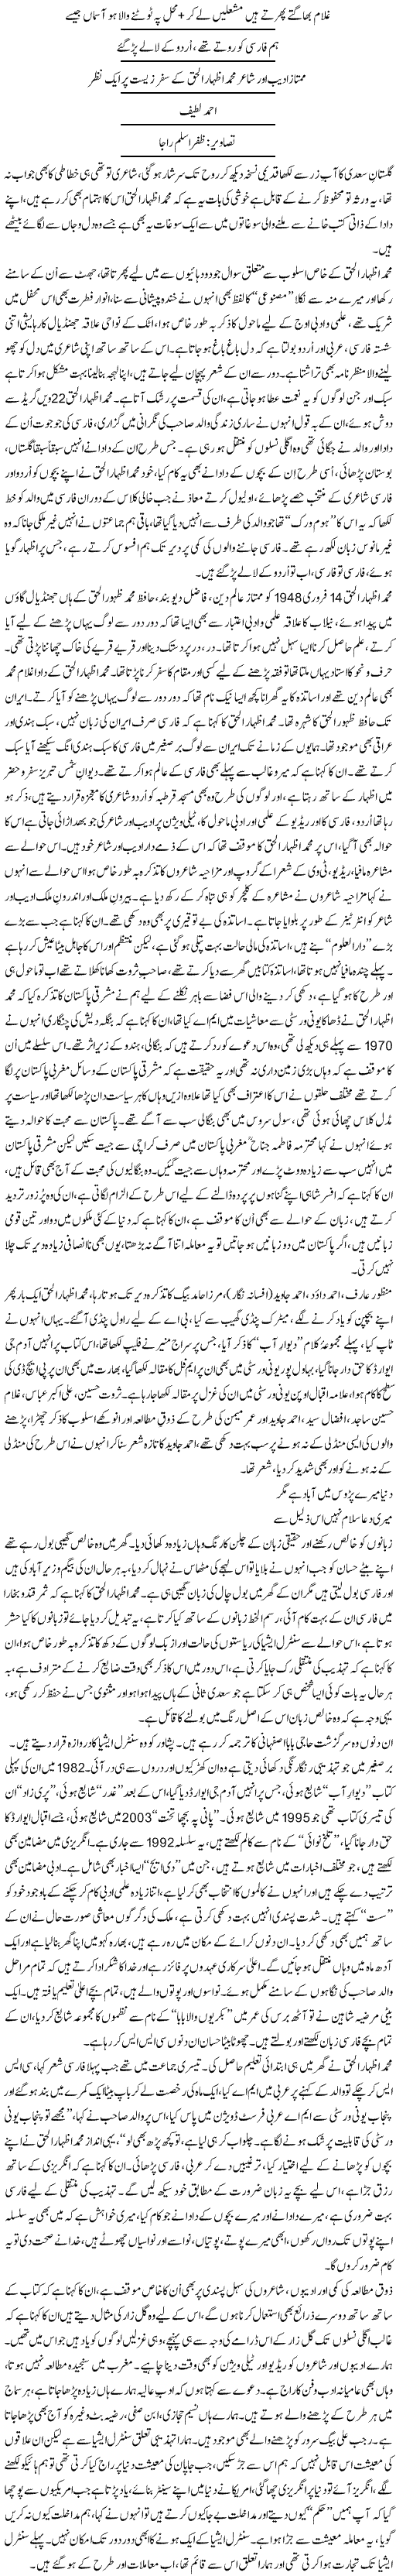 muhammad izhar ul haq daily express interview